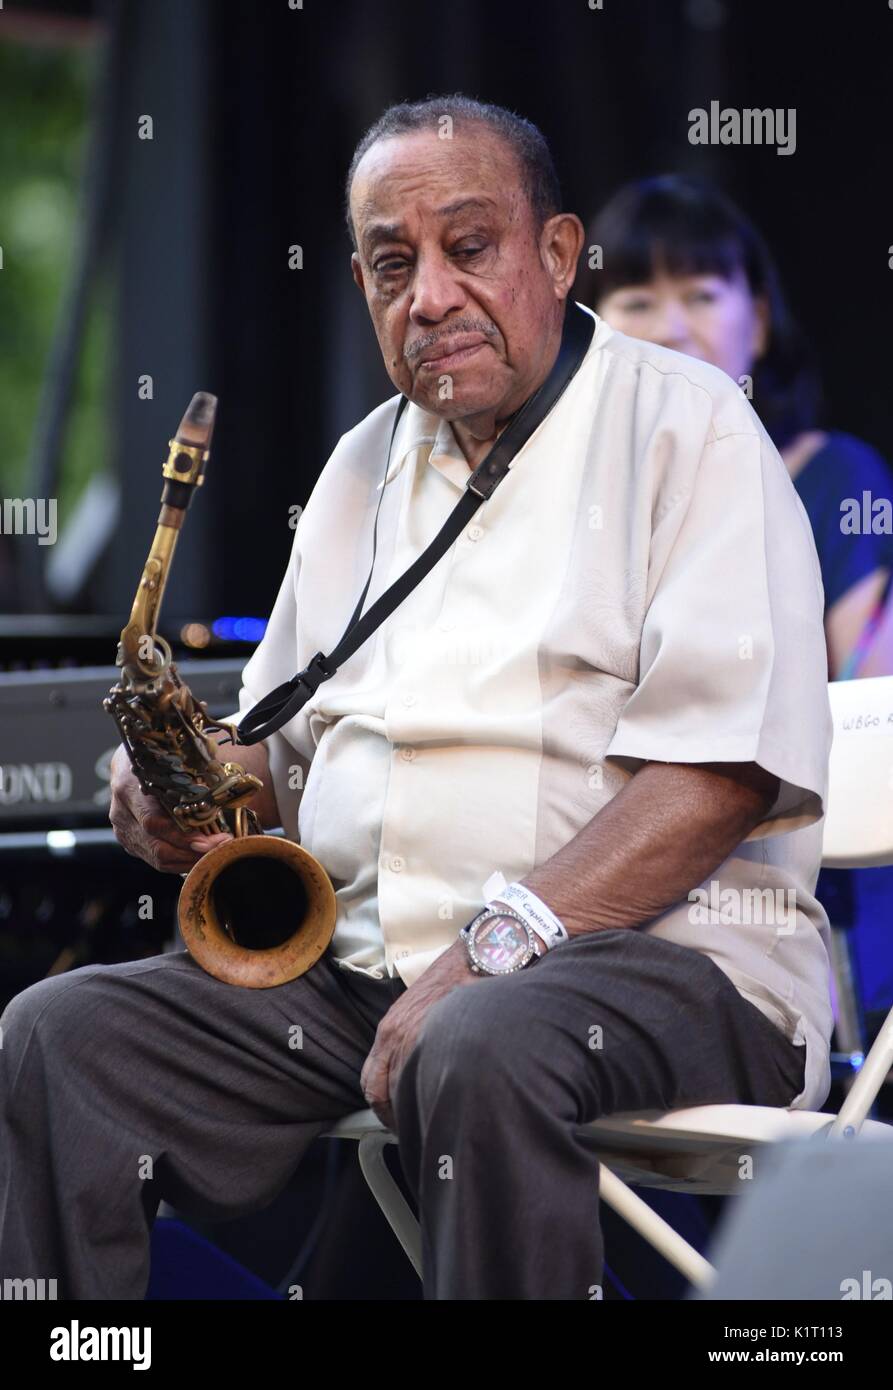 CHARLIE PARKER US jazz musician Stock Photo - Alamy